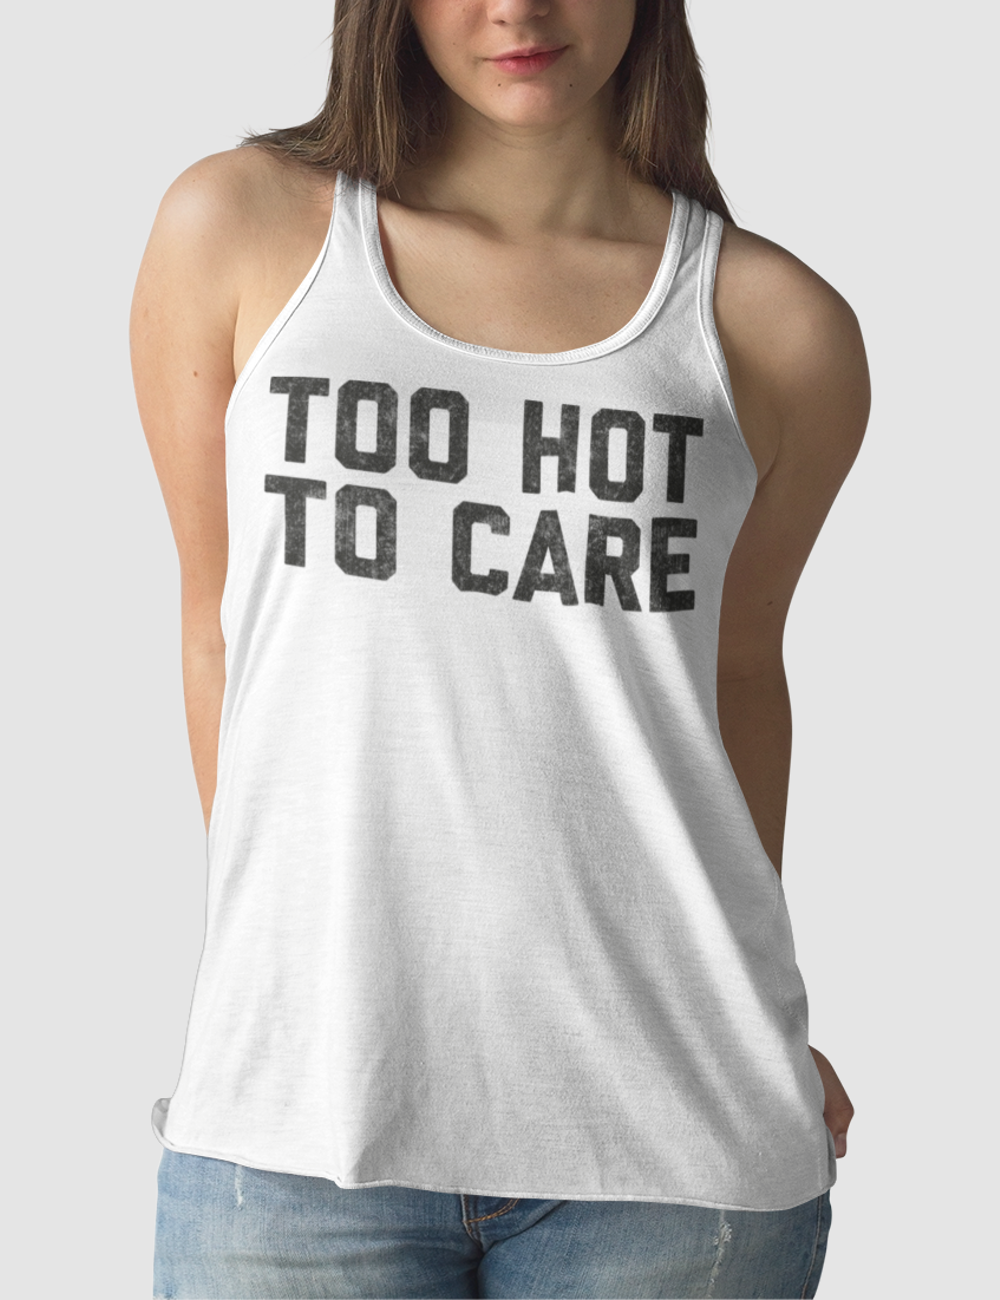 Too Hot To Care | Women's Cut Racerback Tank Top OniTakai